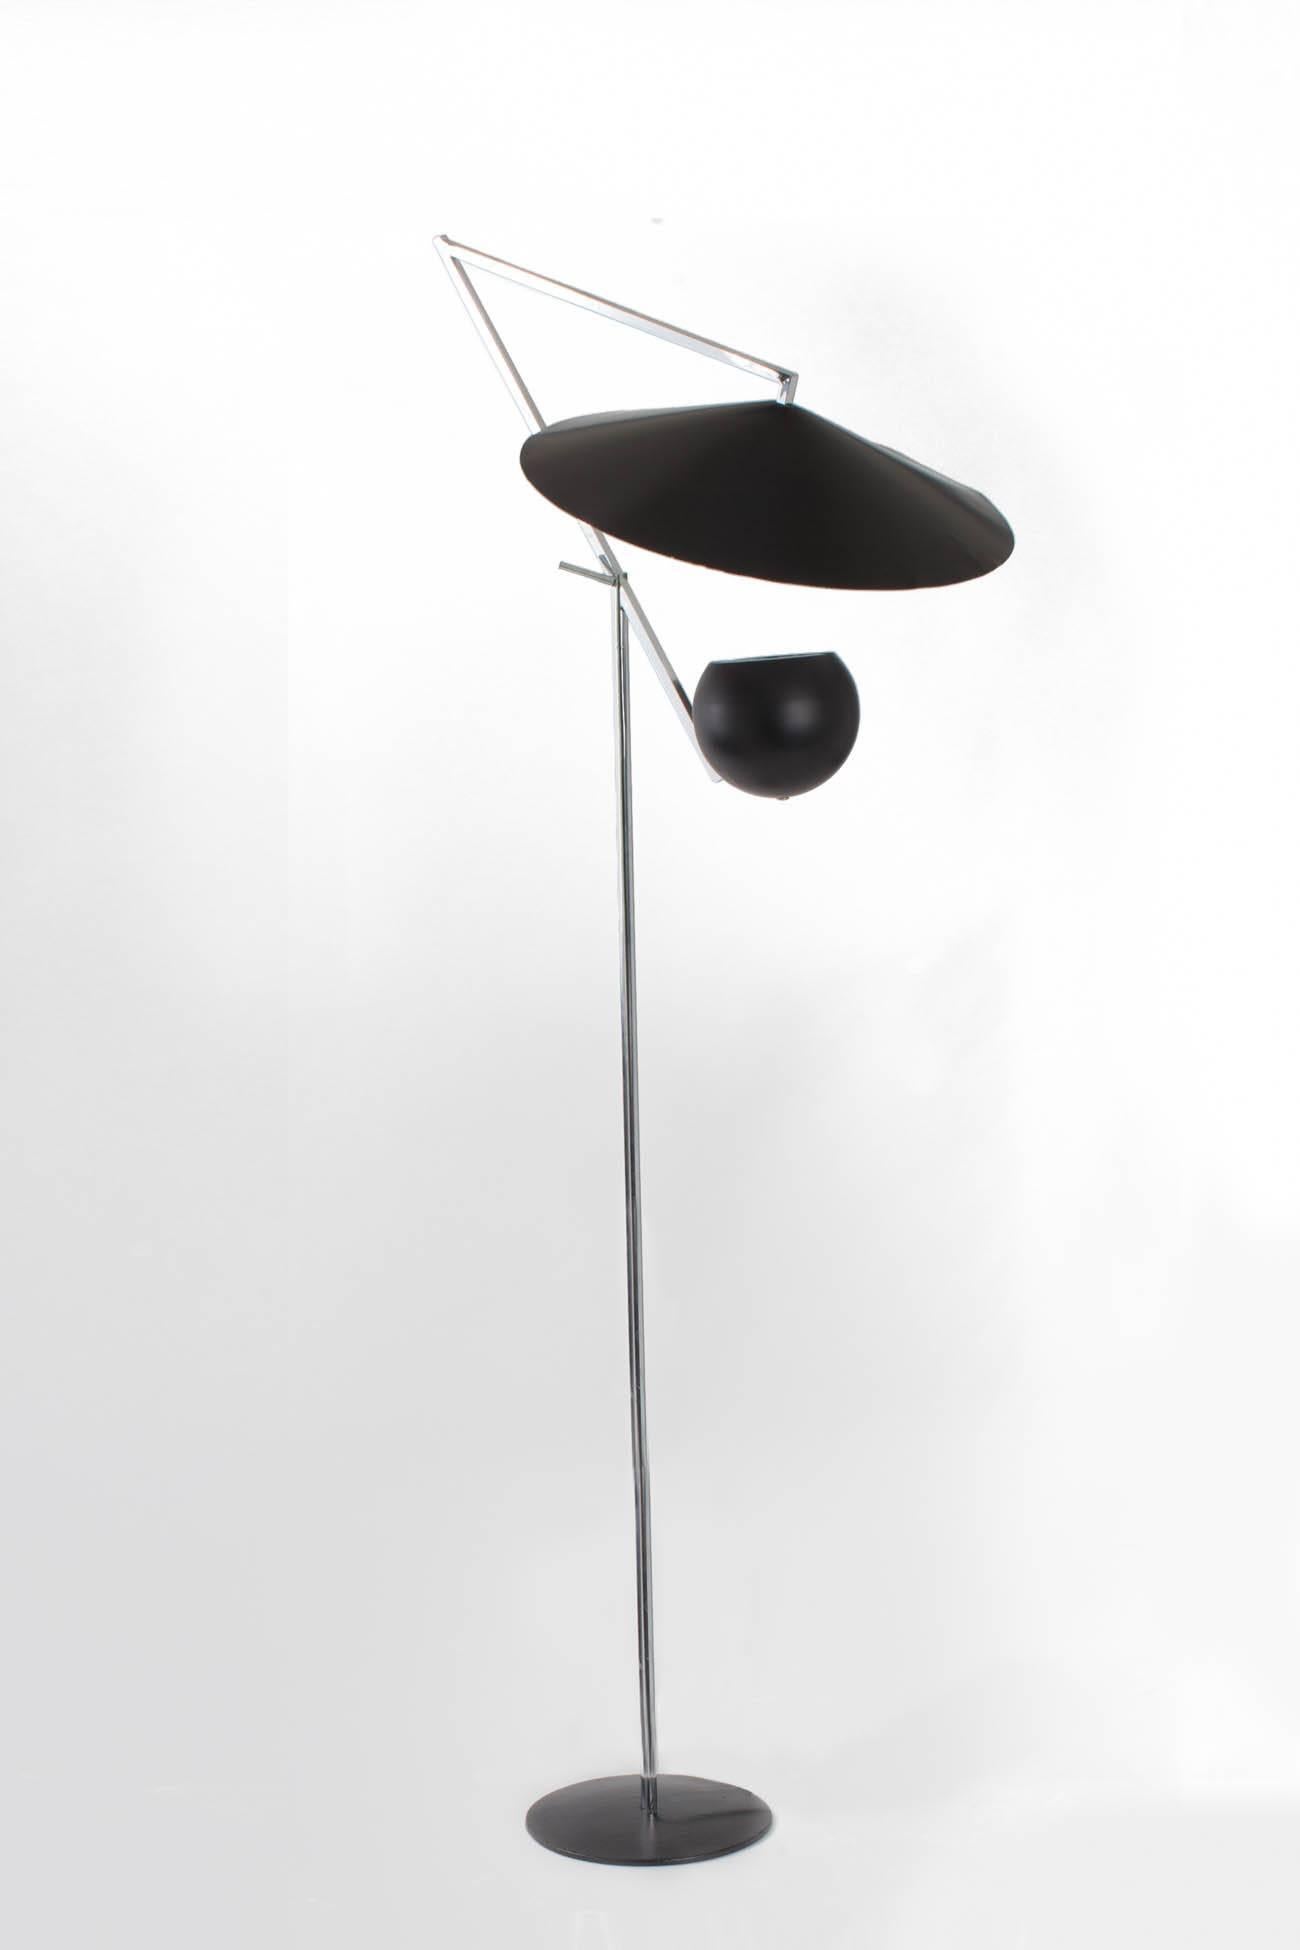 Robert Sonneman (b. 1943)

Bold, graphic articulated floor lamp with adjustable head in nickel and painted metal, by modern light master Robert Sonneman.